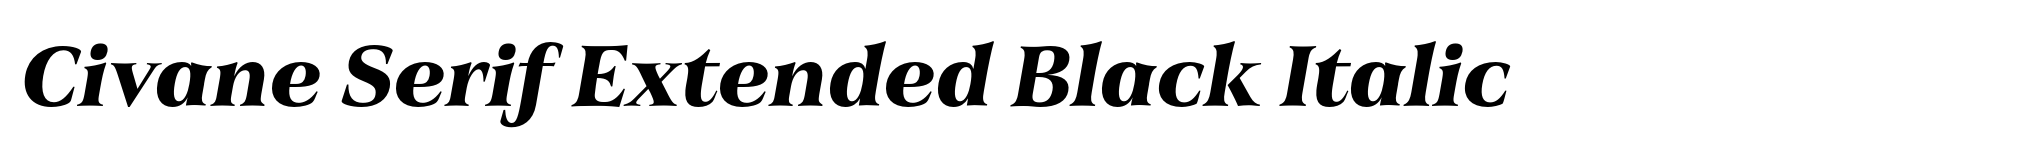 Civane Serif Extended Black Italic image